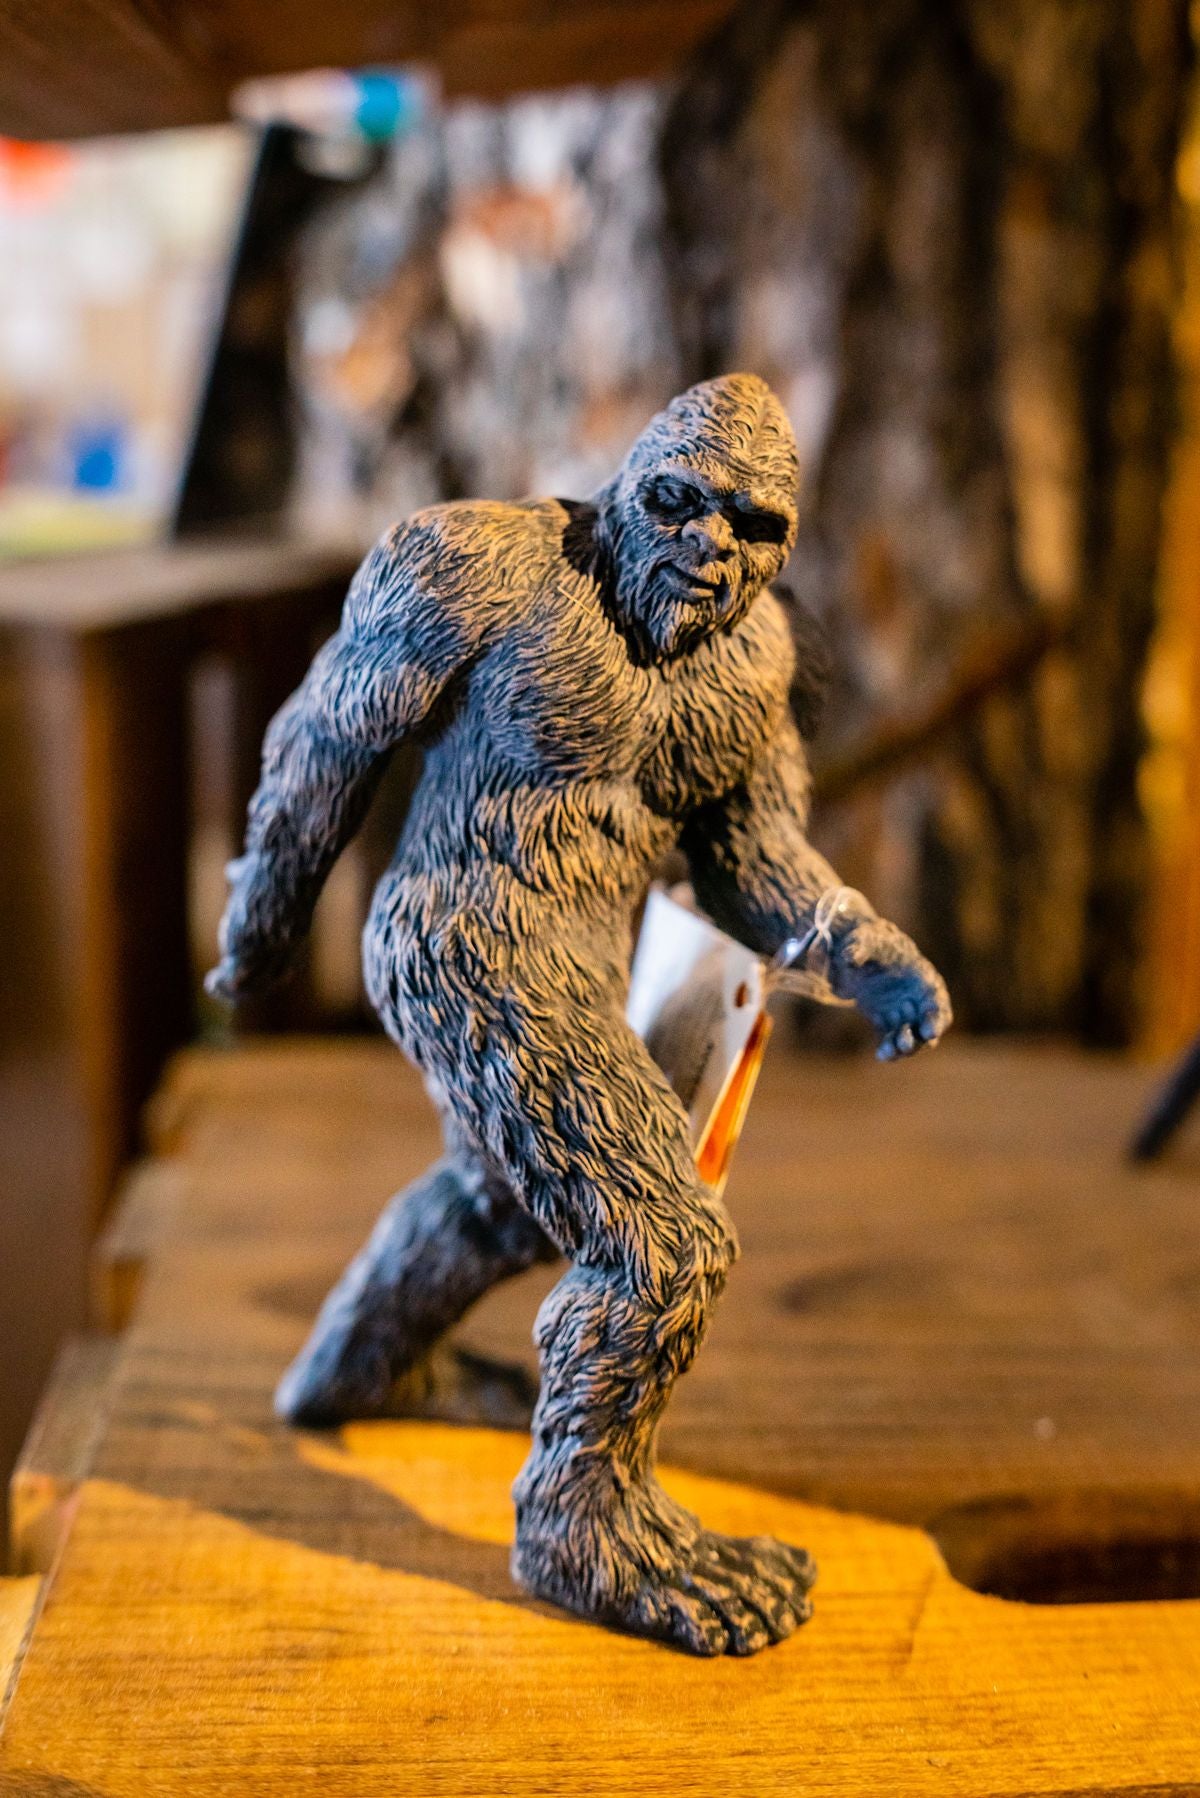 Safari Ltd. Bigfoot Figurine - Detailed 5.25 Model Figure - Fun Toy for  Boys, Girls, and Kids Ages 3+